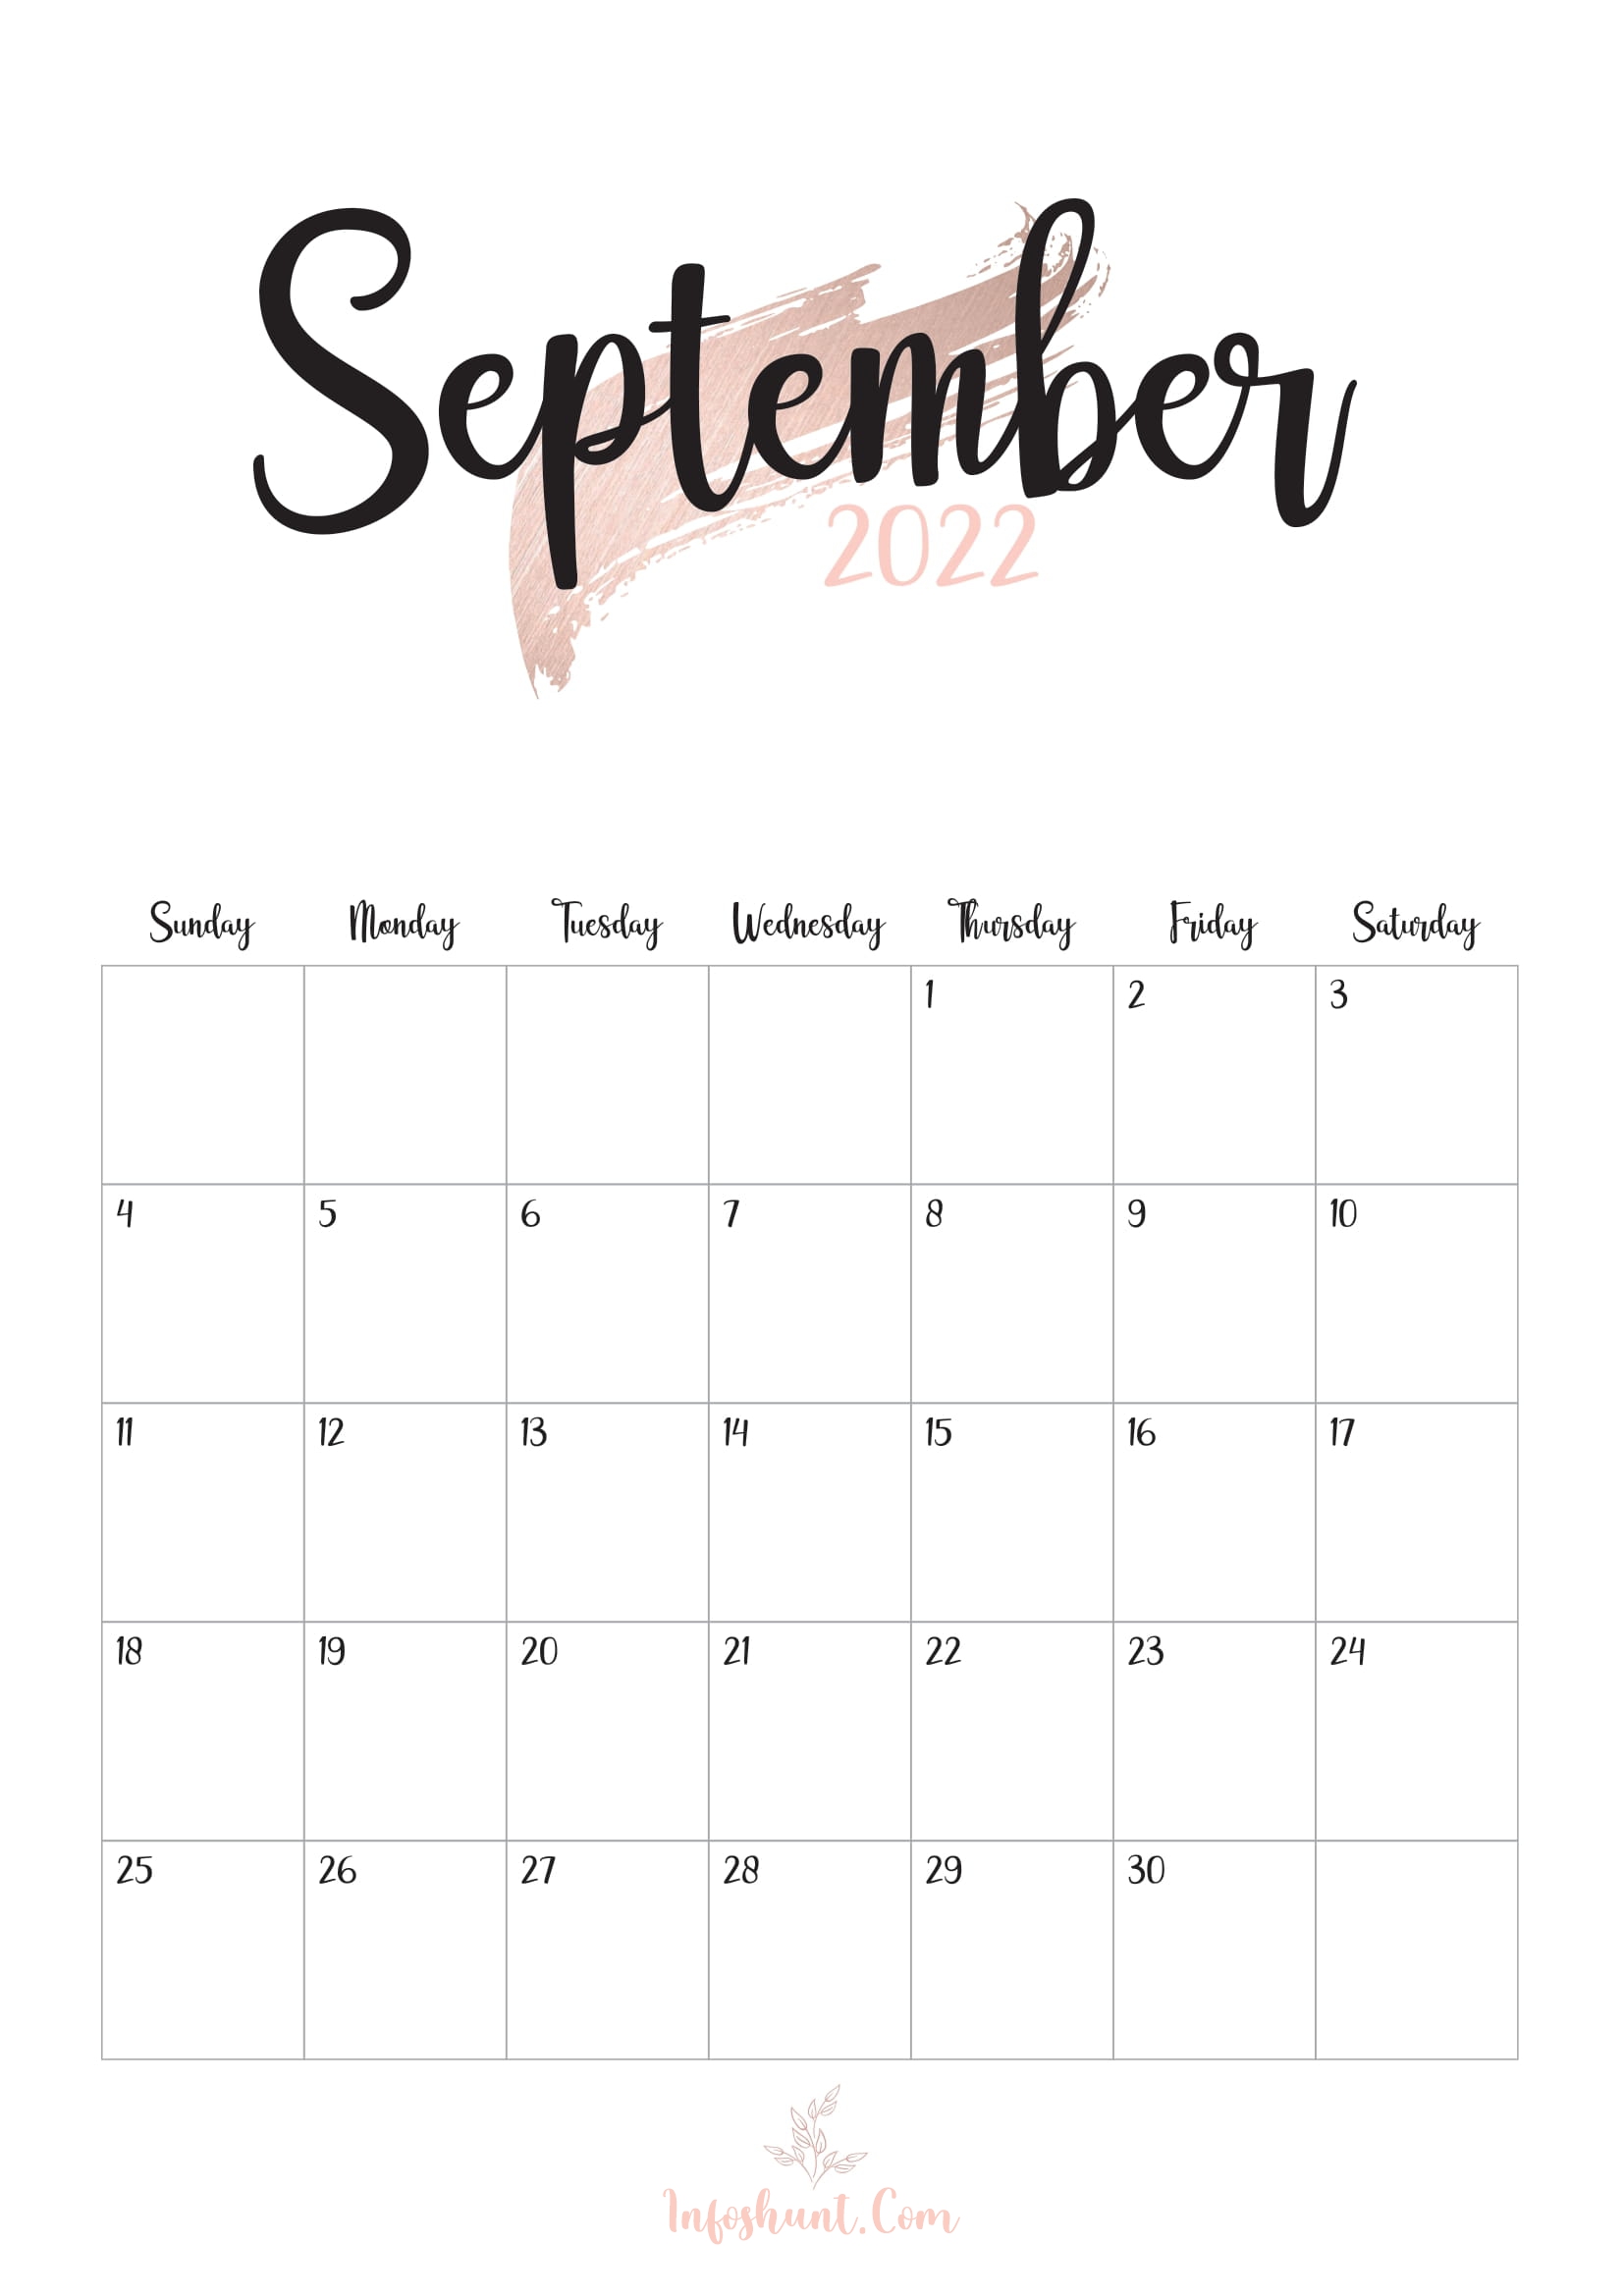 46 Free Printable September 2022 Calendars to Download - Onedesblog